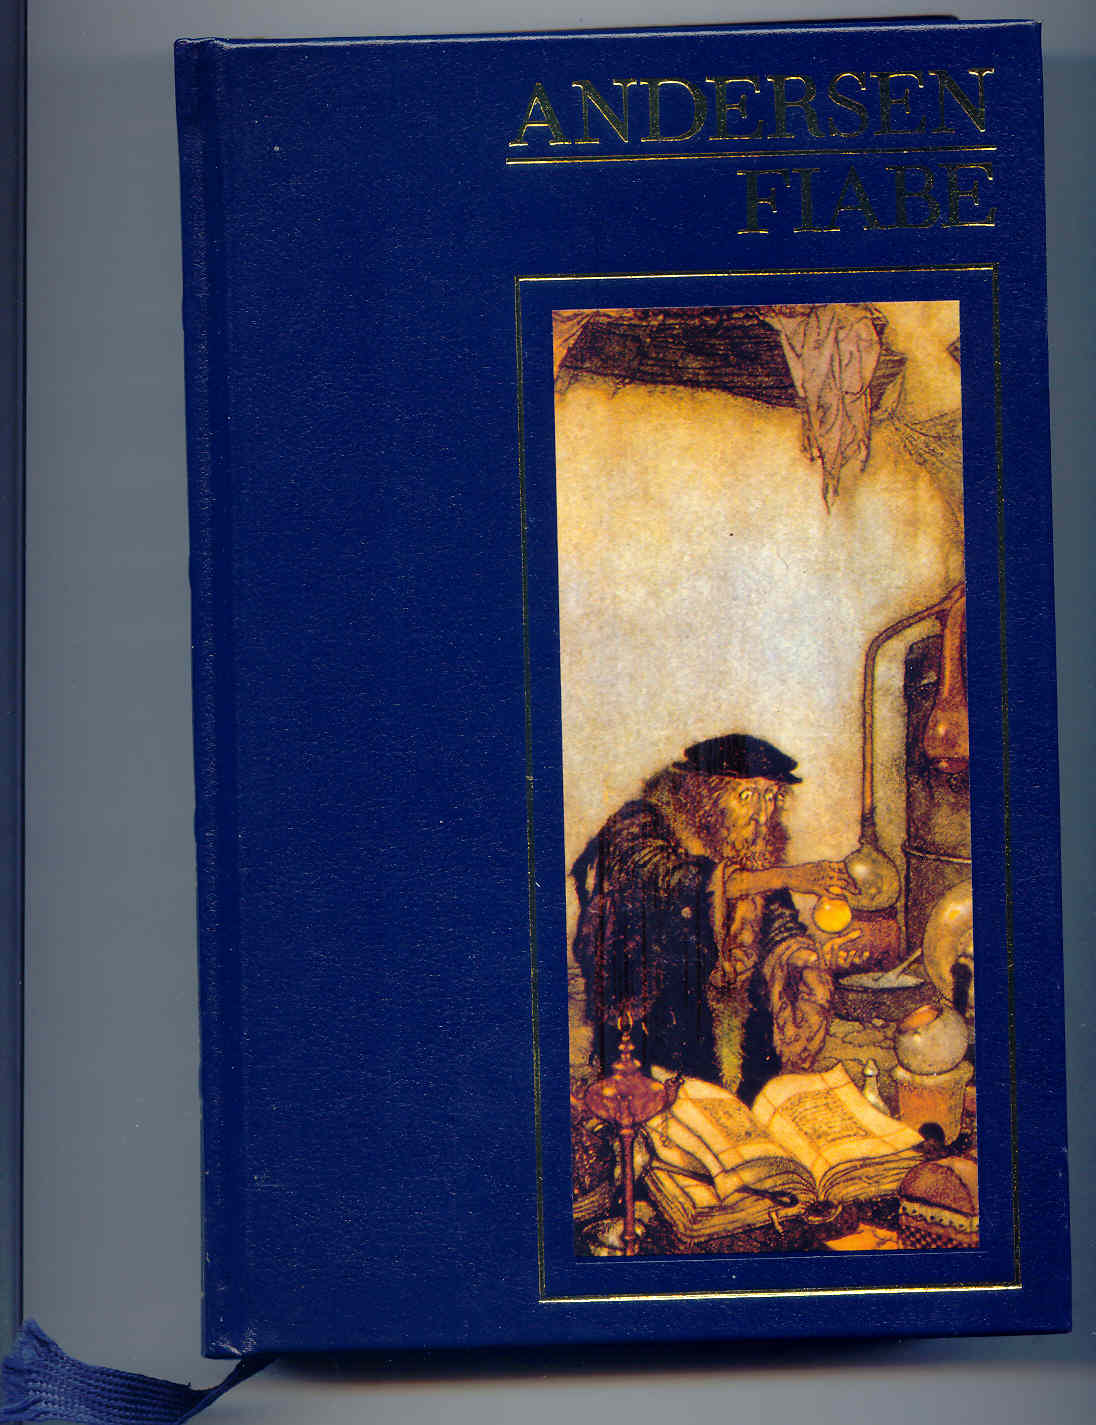 Libro "Andersen - Fiabe"